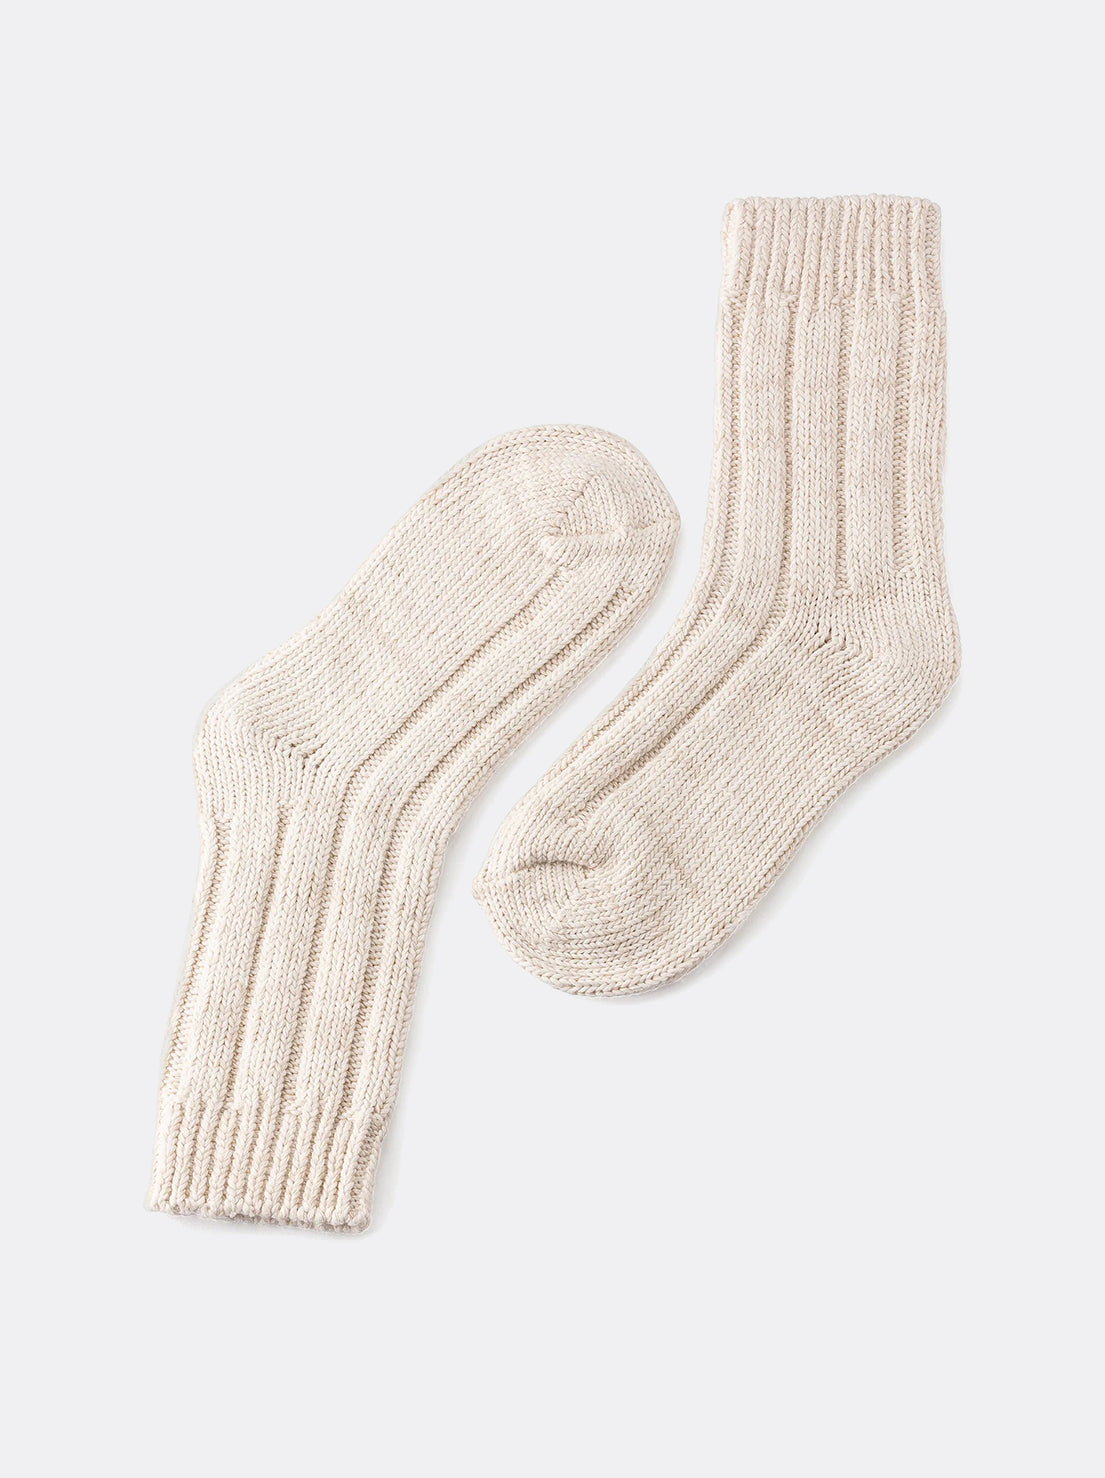 Birkenstock - Cotton Twist Socks - Offwhite